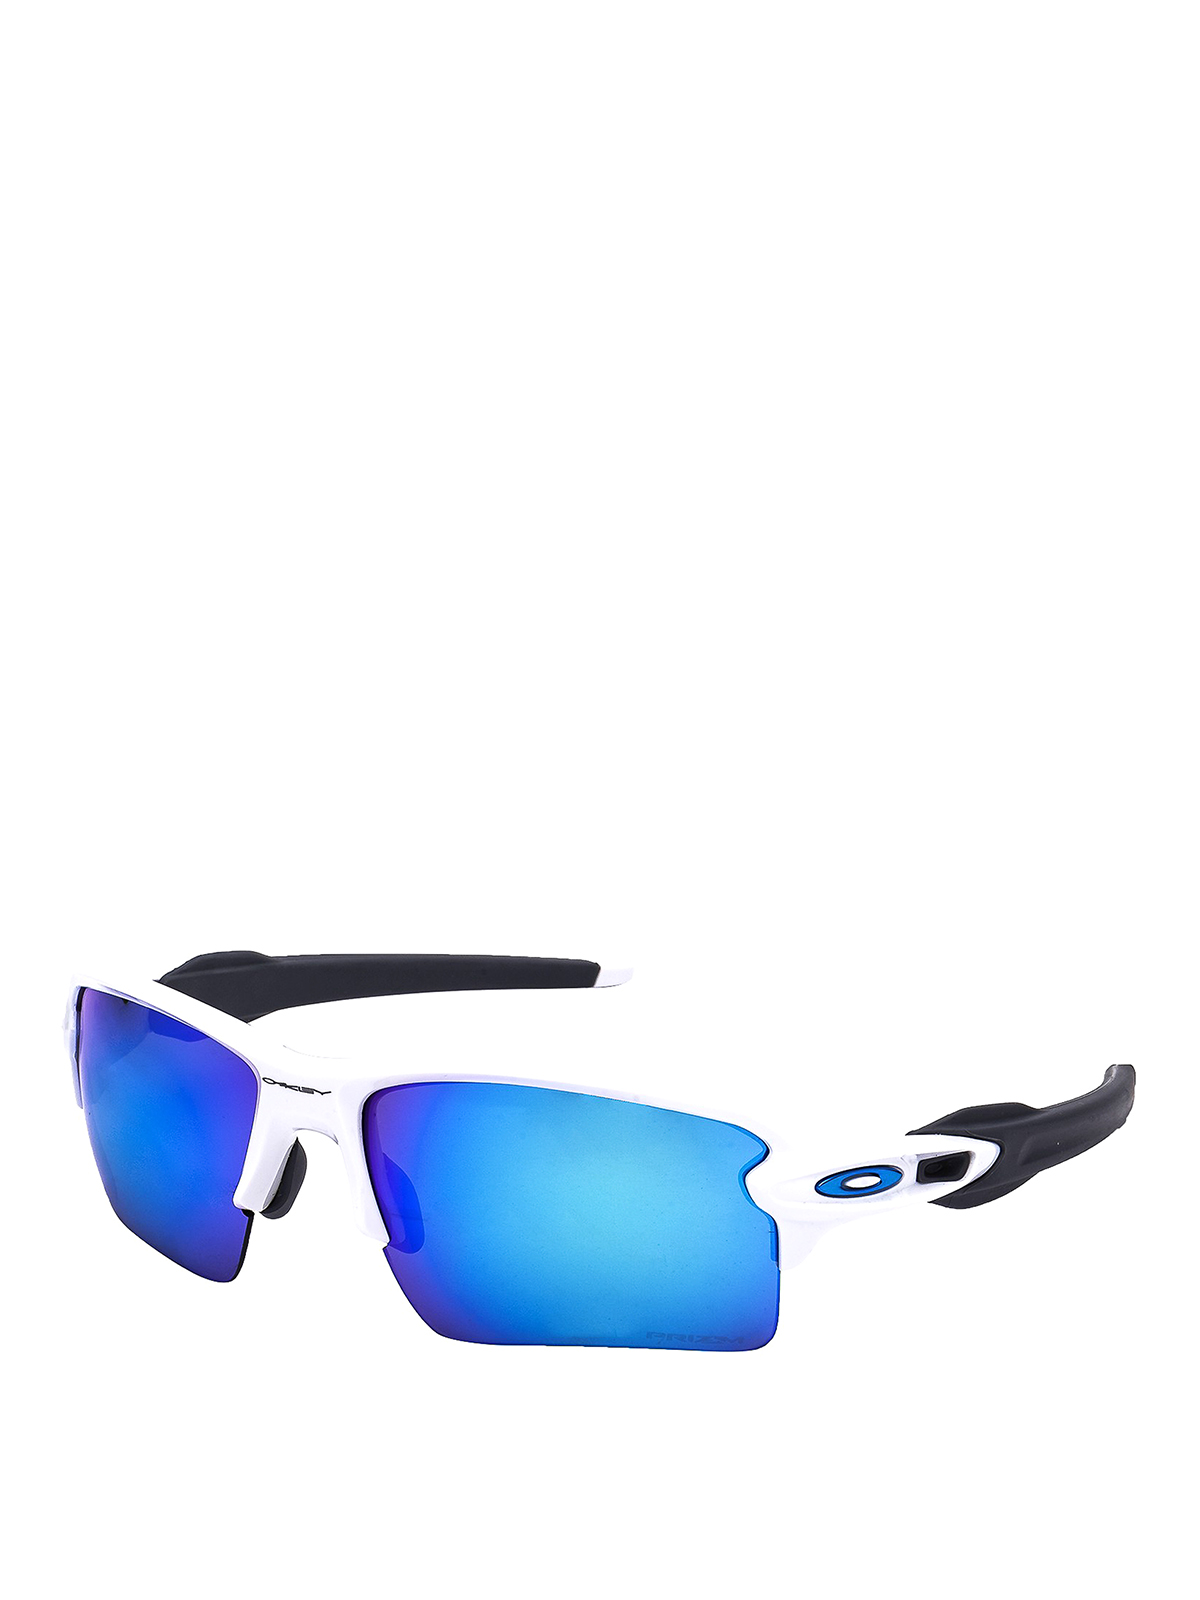 Sunglasses Oakley - Blue lenses bicolour acetate sunglasses -  0OO918891889459918894